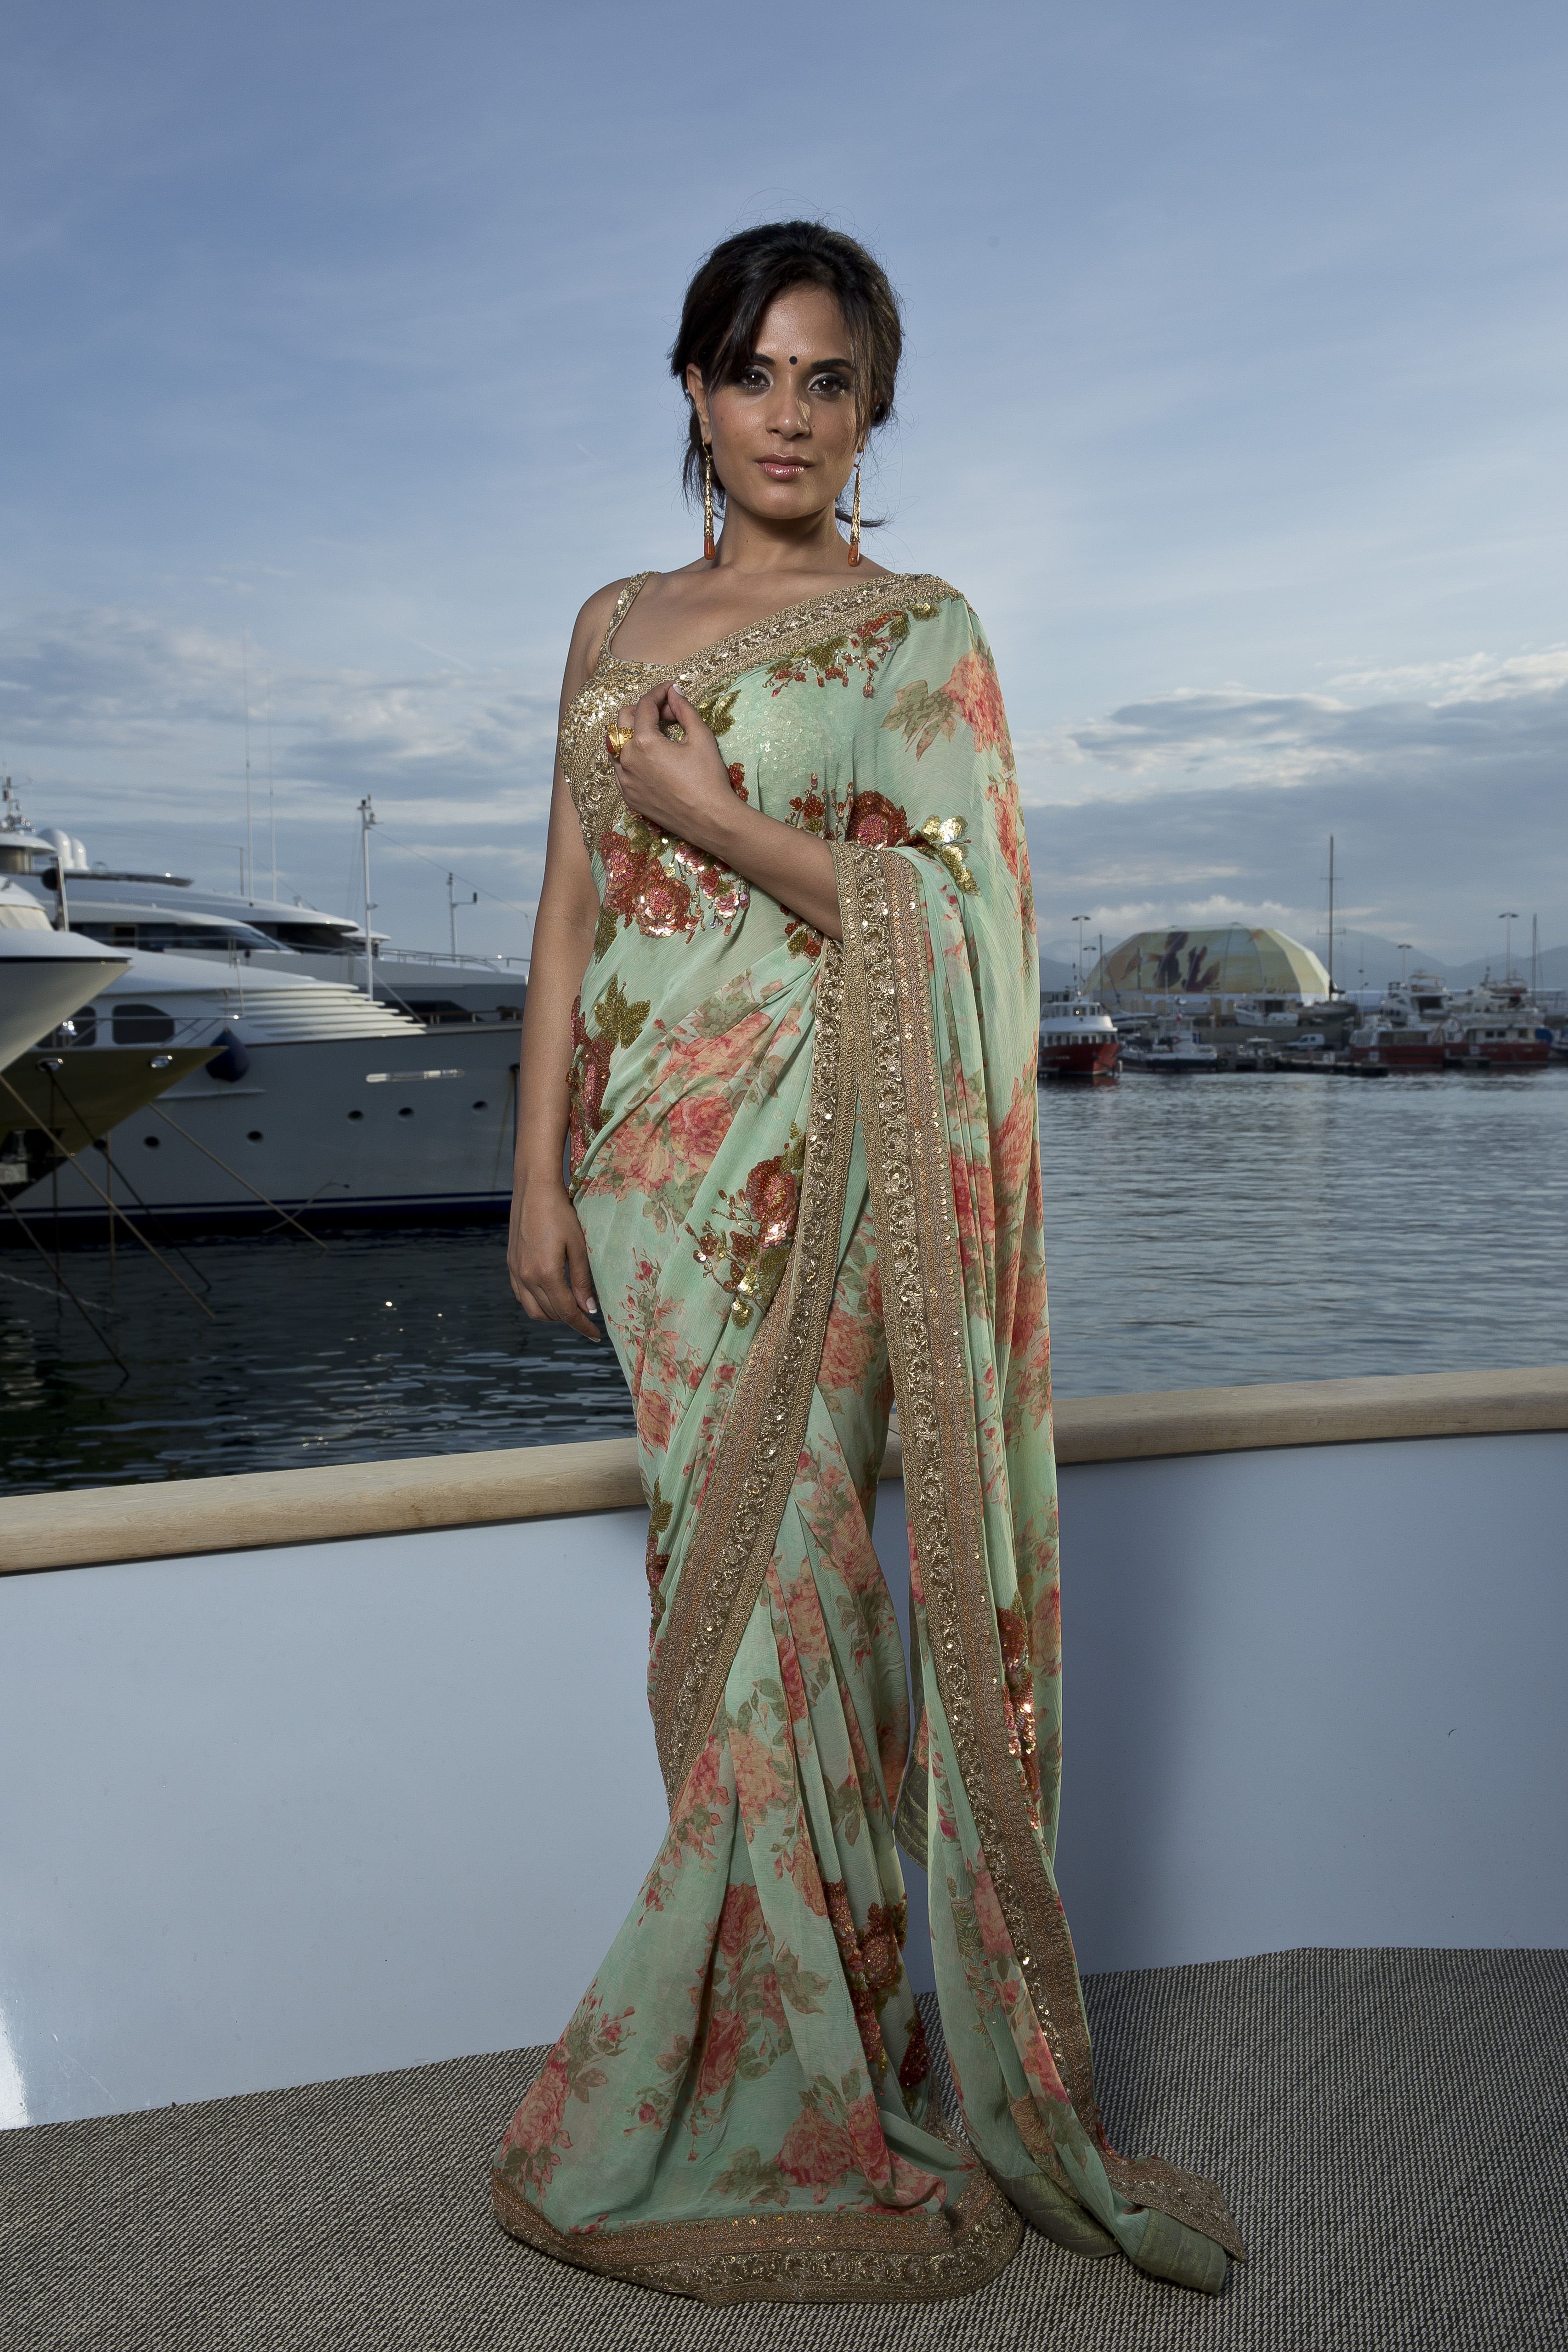 Richa Chadda par Paul Blind, Cannes 2015